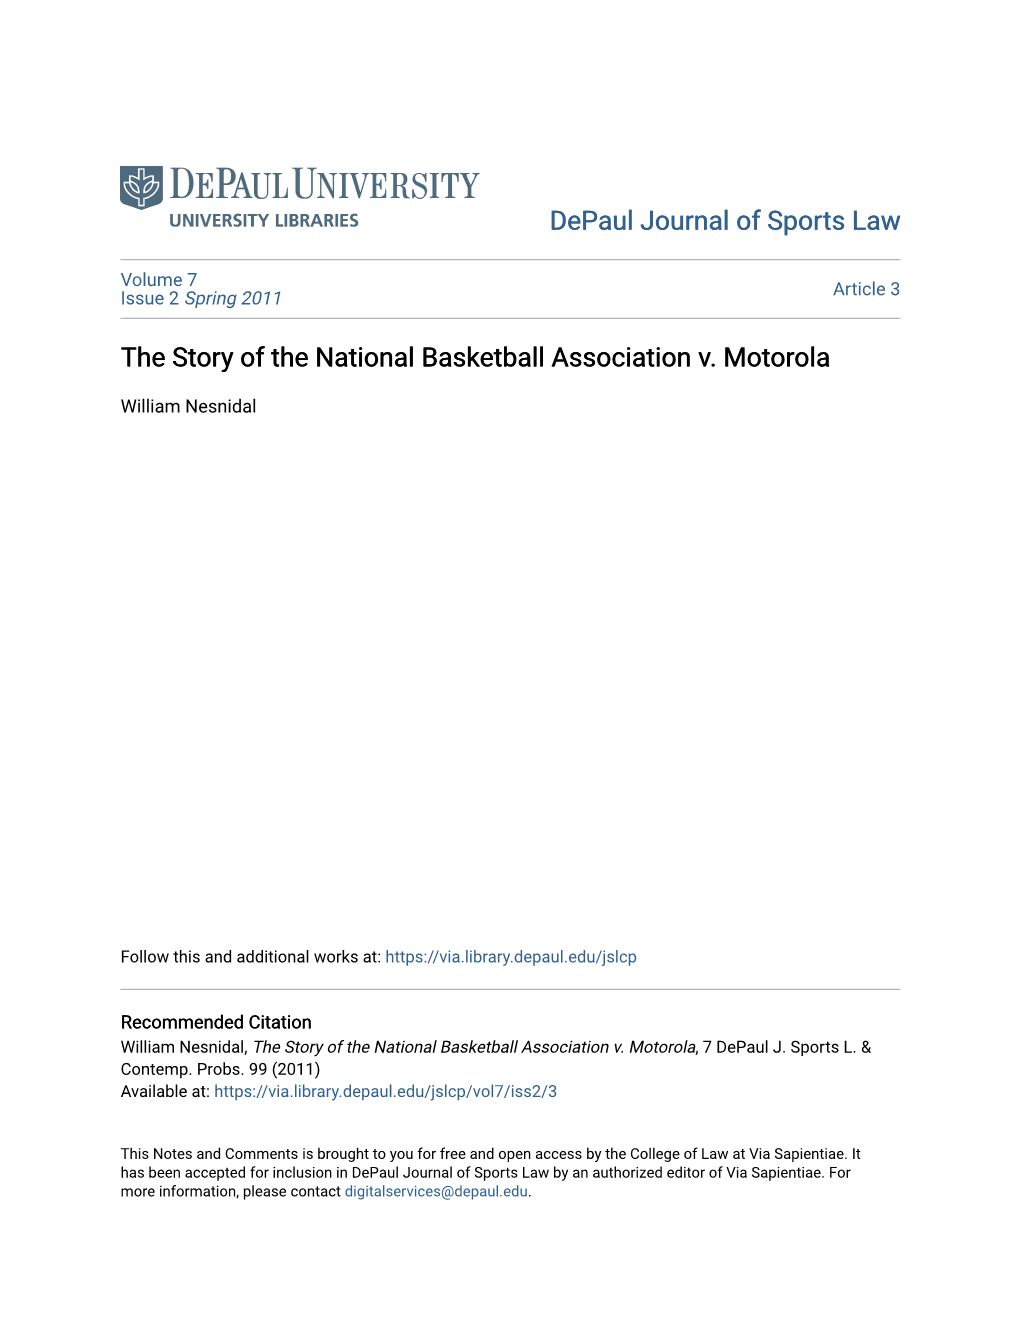 The Story of the National Basketball Association V. Motorola